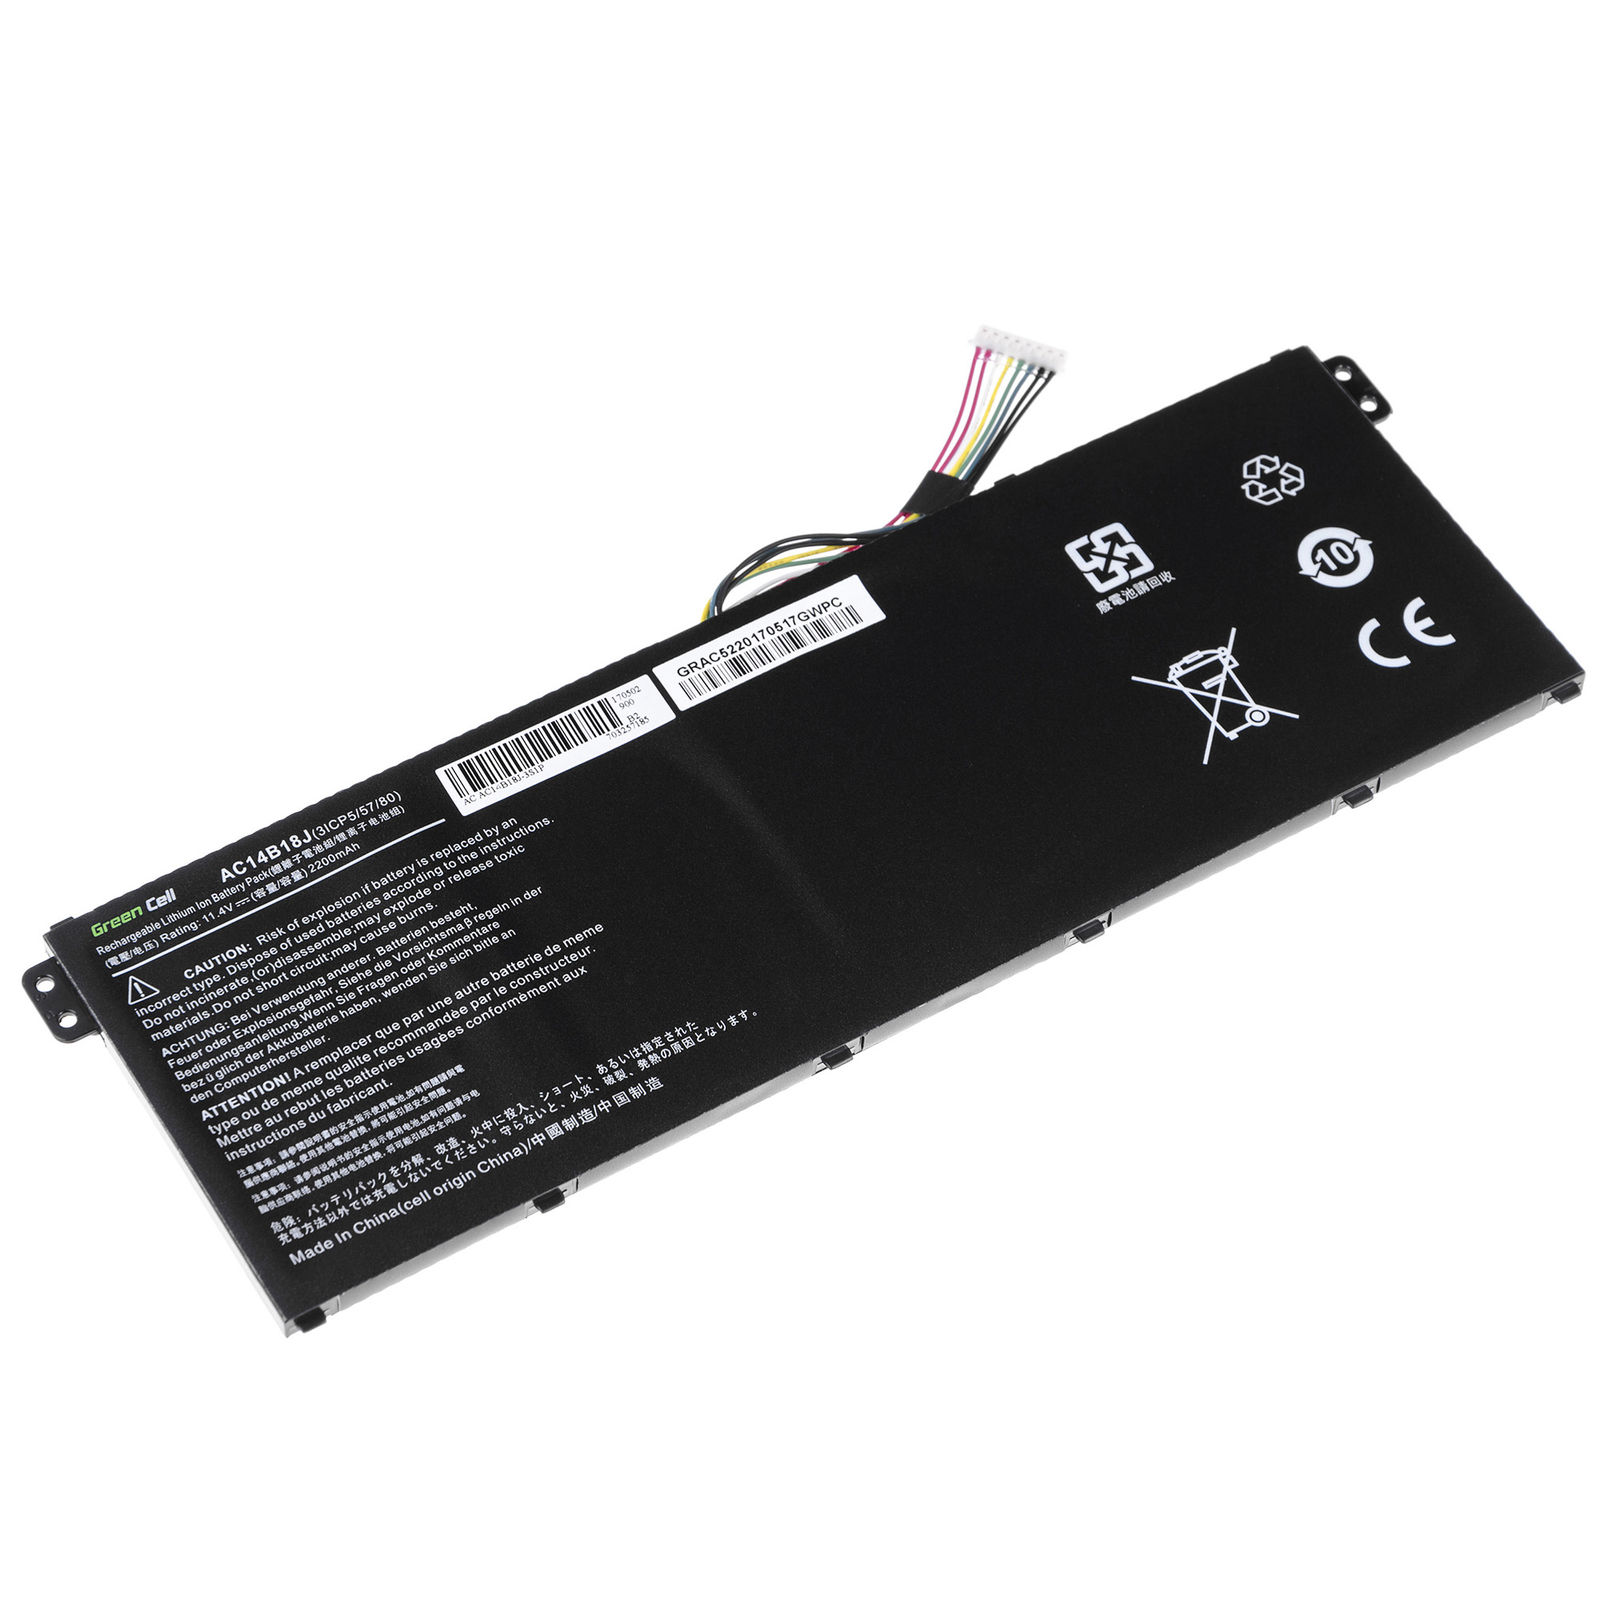 Acer Extensa 2519-P560 2200mAh kompatibelt batterier